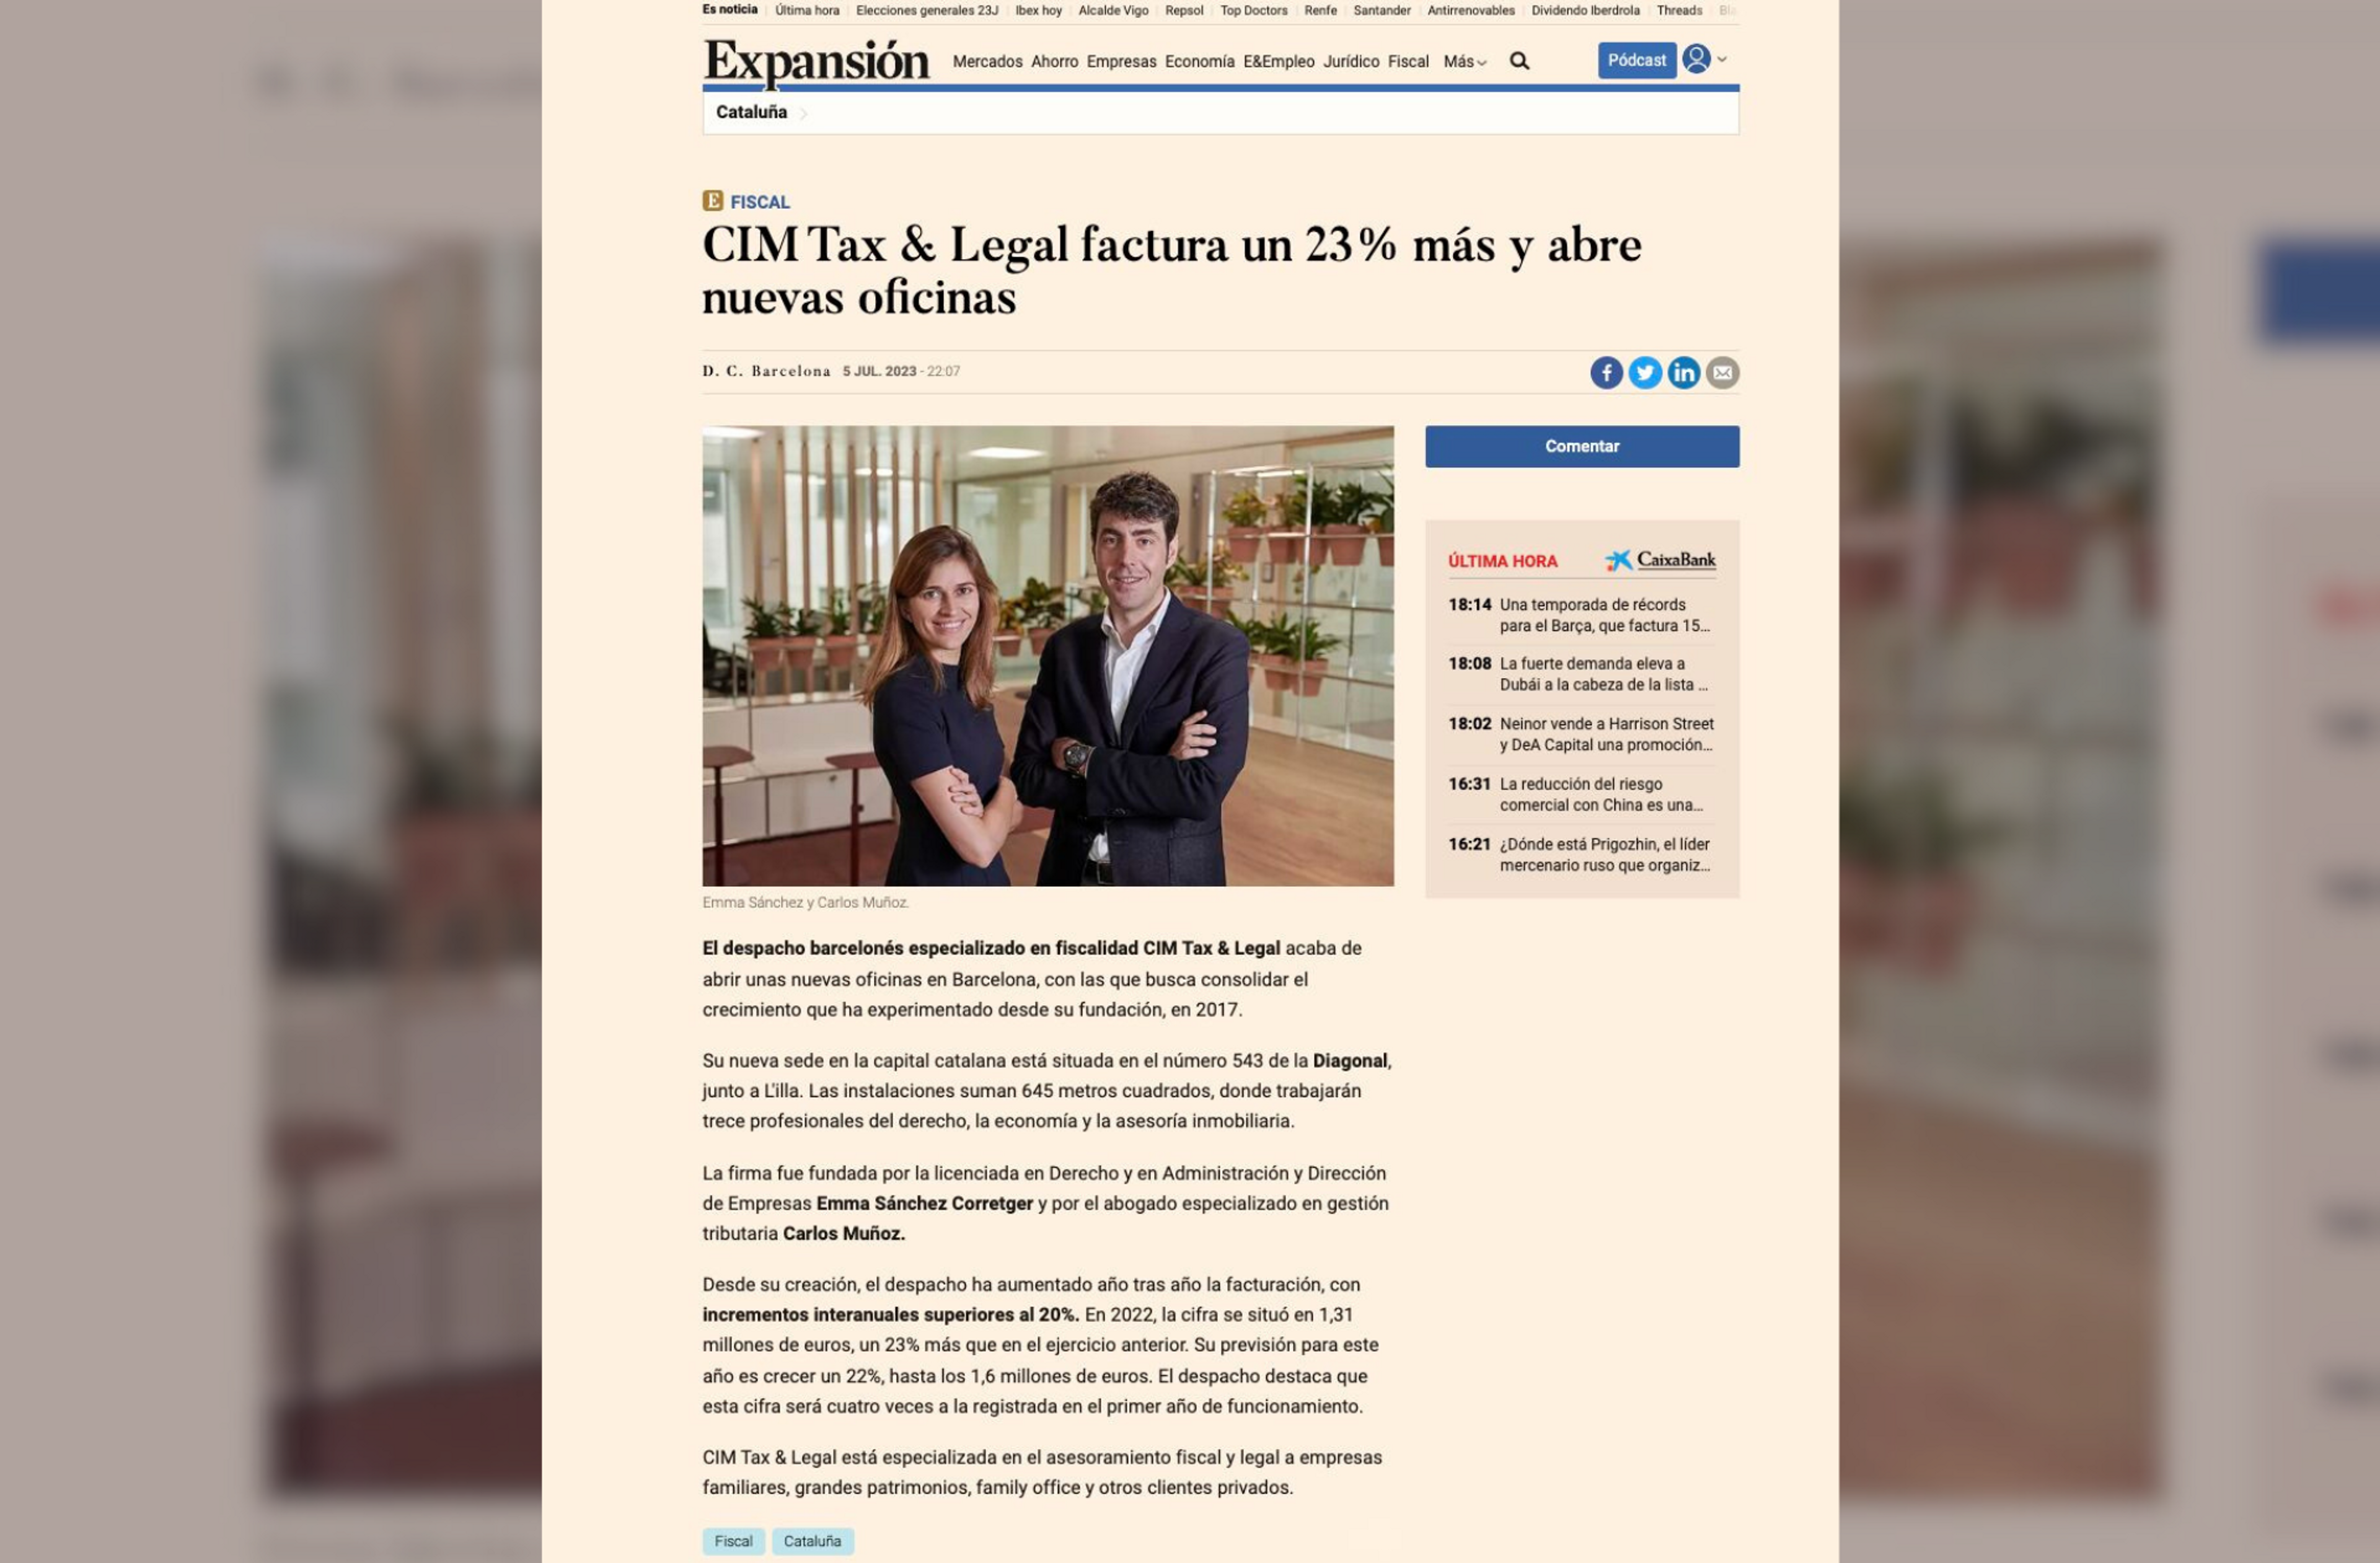 Cim tax & legal in Expansión